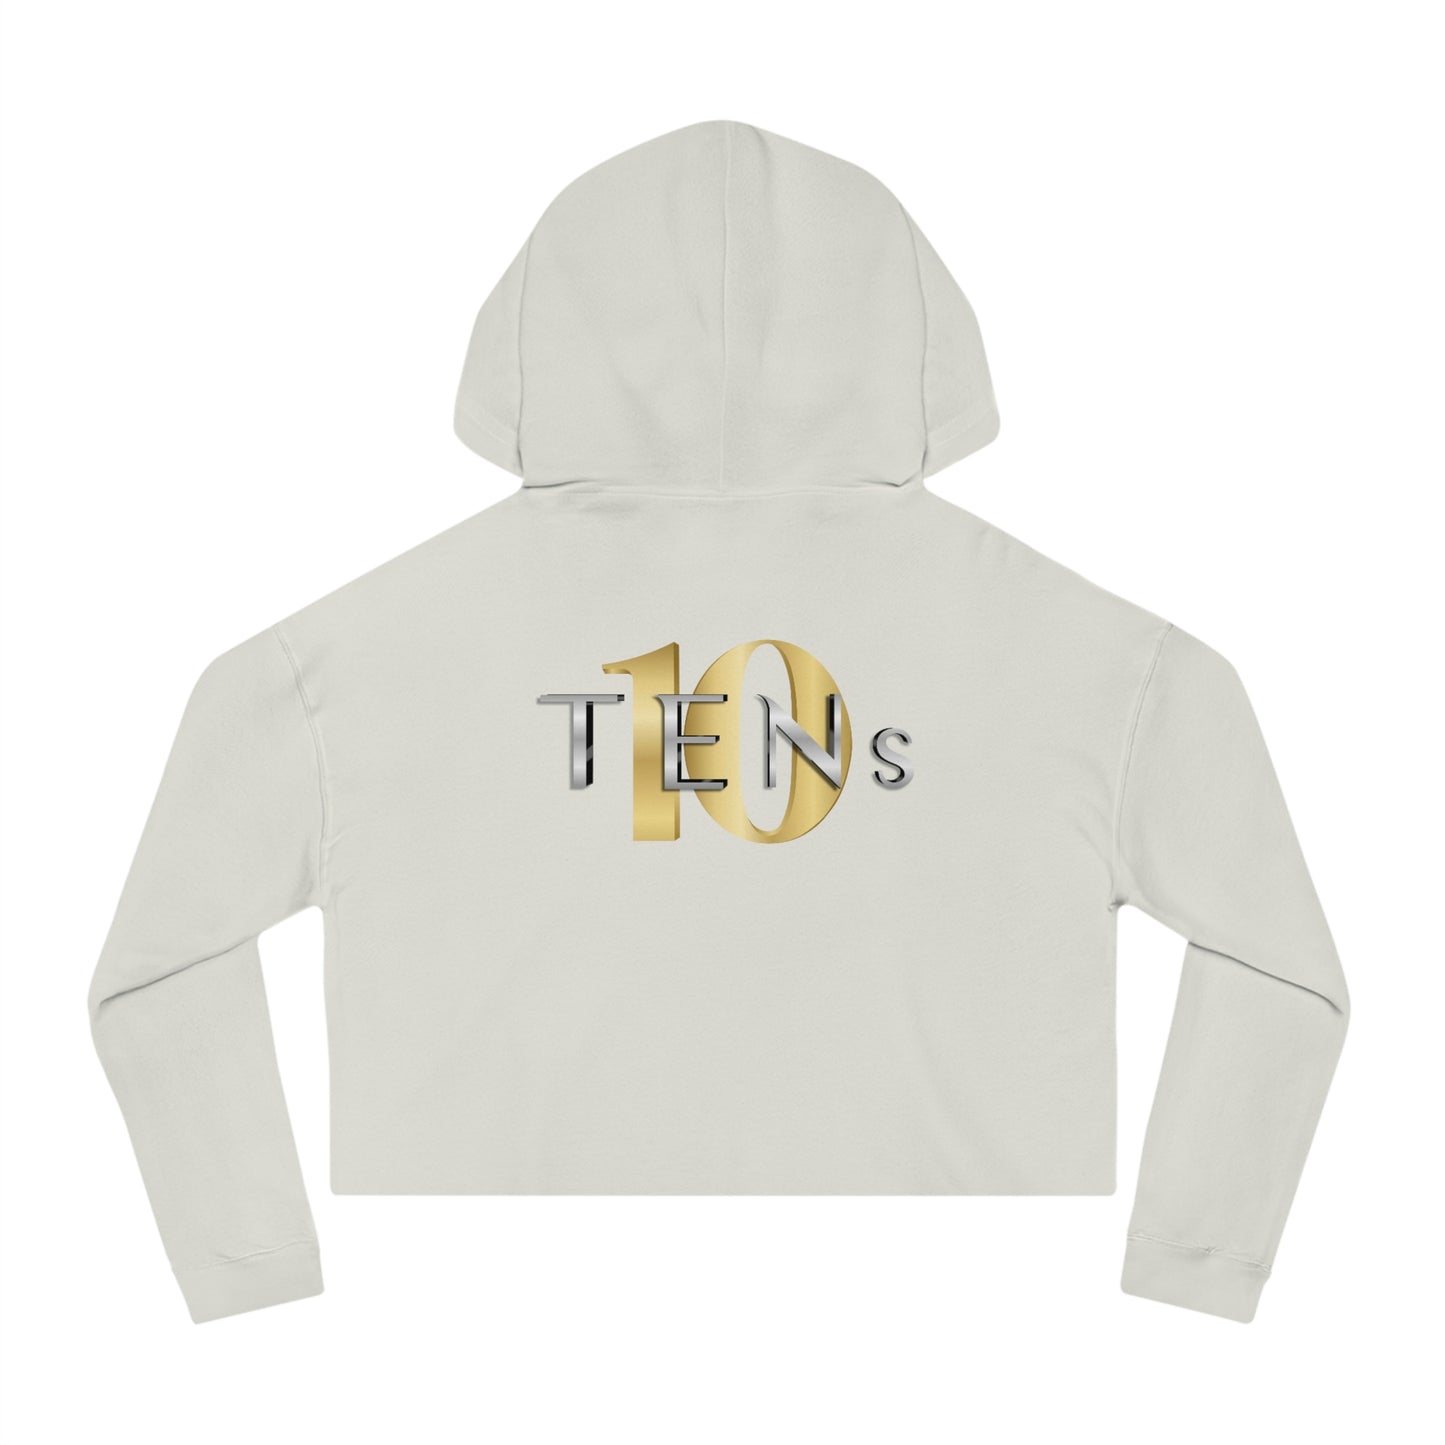 Tens Show Club Women’s Cropped Hooded Sweatshirt